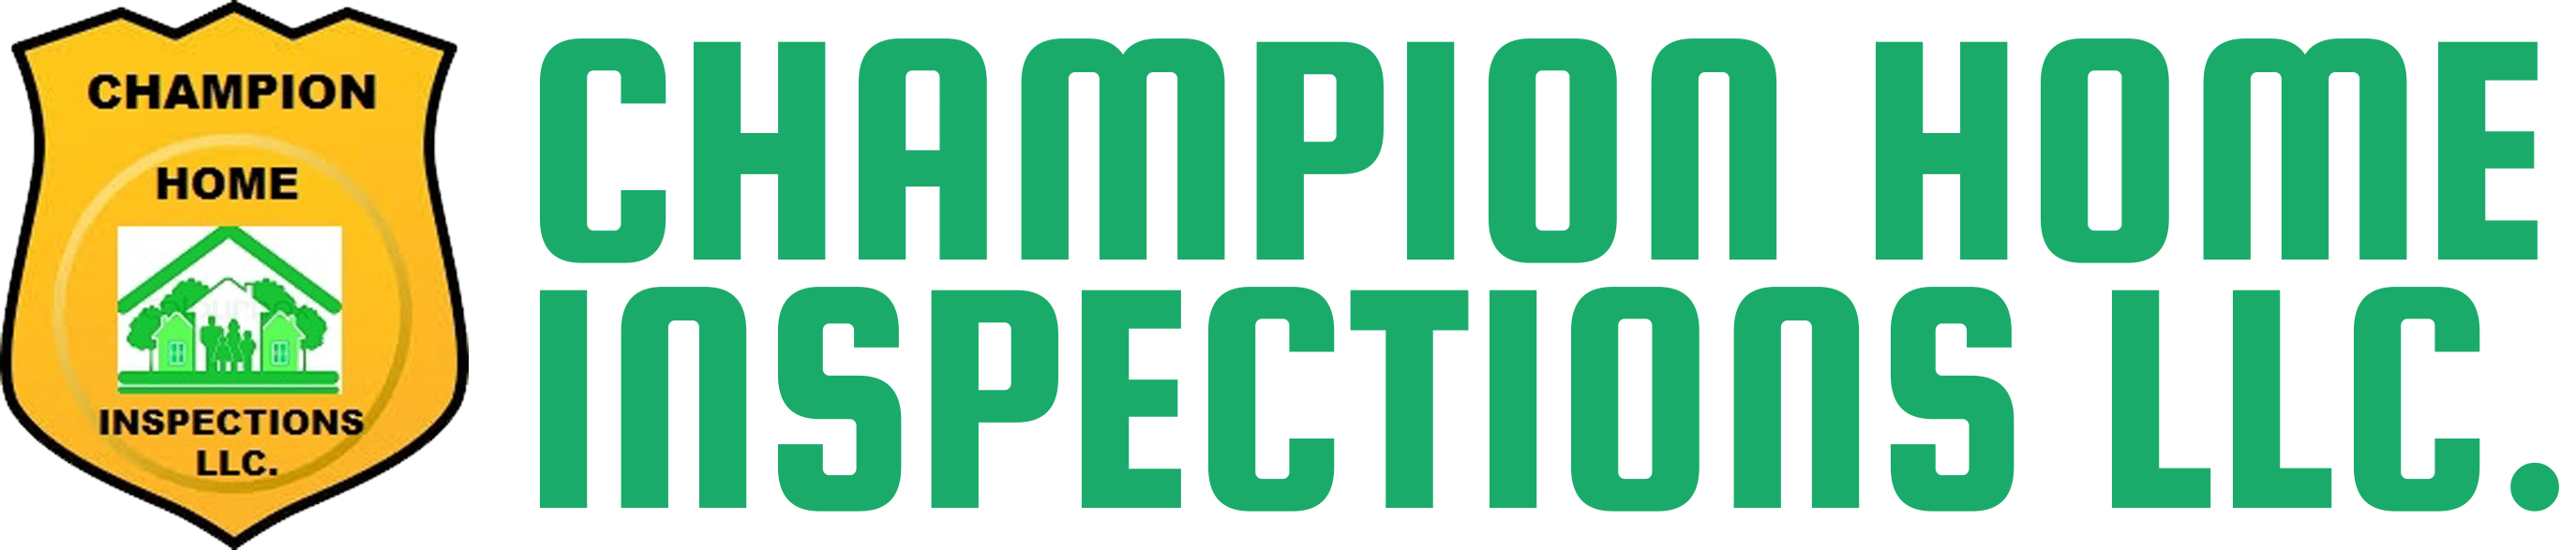 Champion Home Inspections LLC. logo